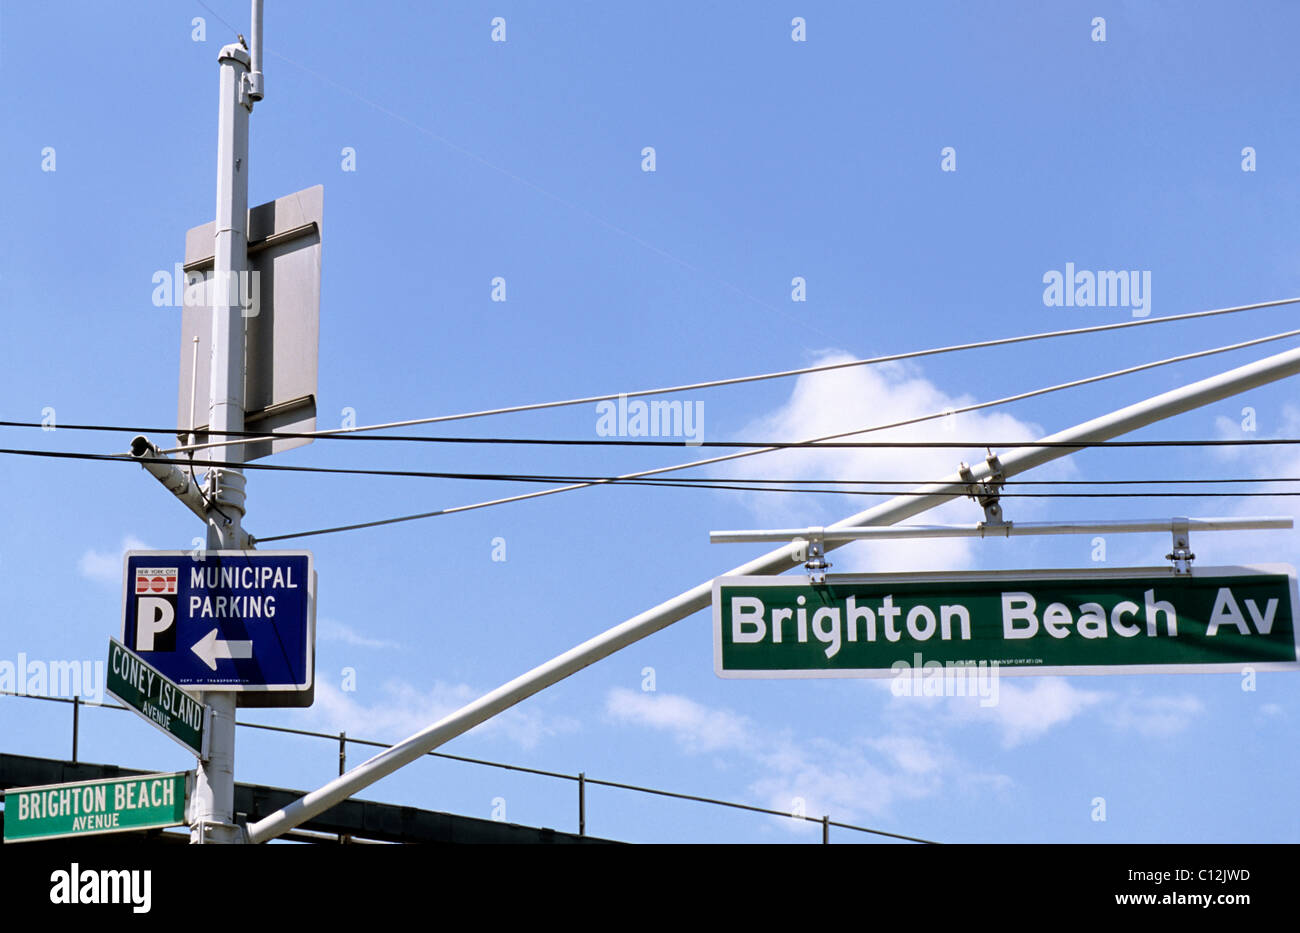 USA New York Brooklyn Borough Brighton Beach Avenue Coney Island Avenue Municipal Parking sign. Outdoors Stock Photo